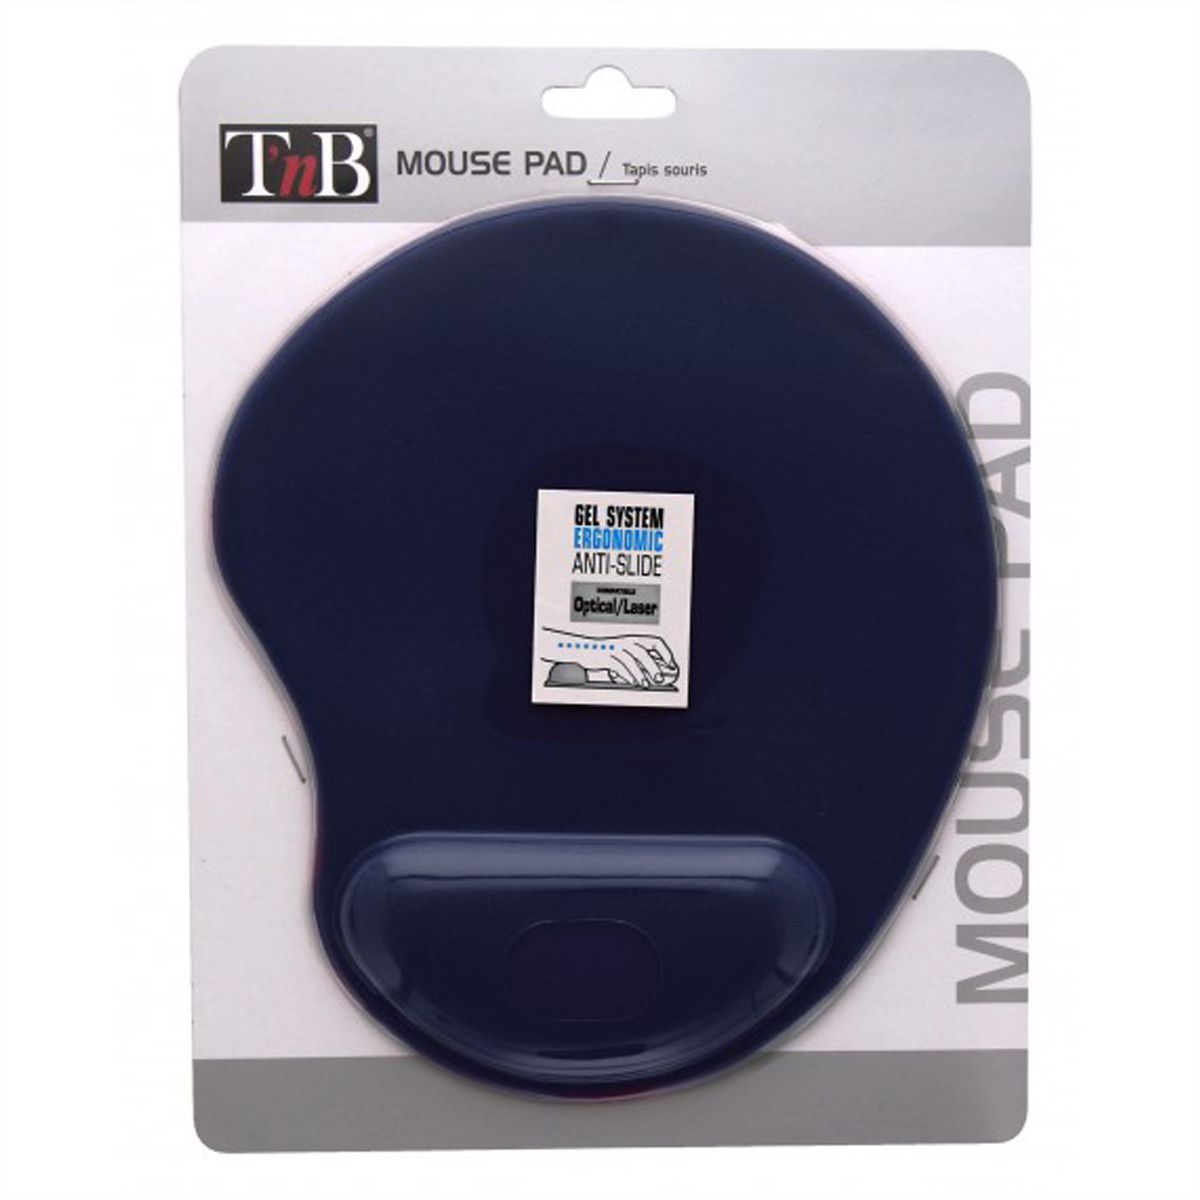 Tapis de souris ergonomique avec repose-poignet bleu - T'nB